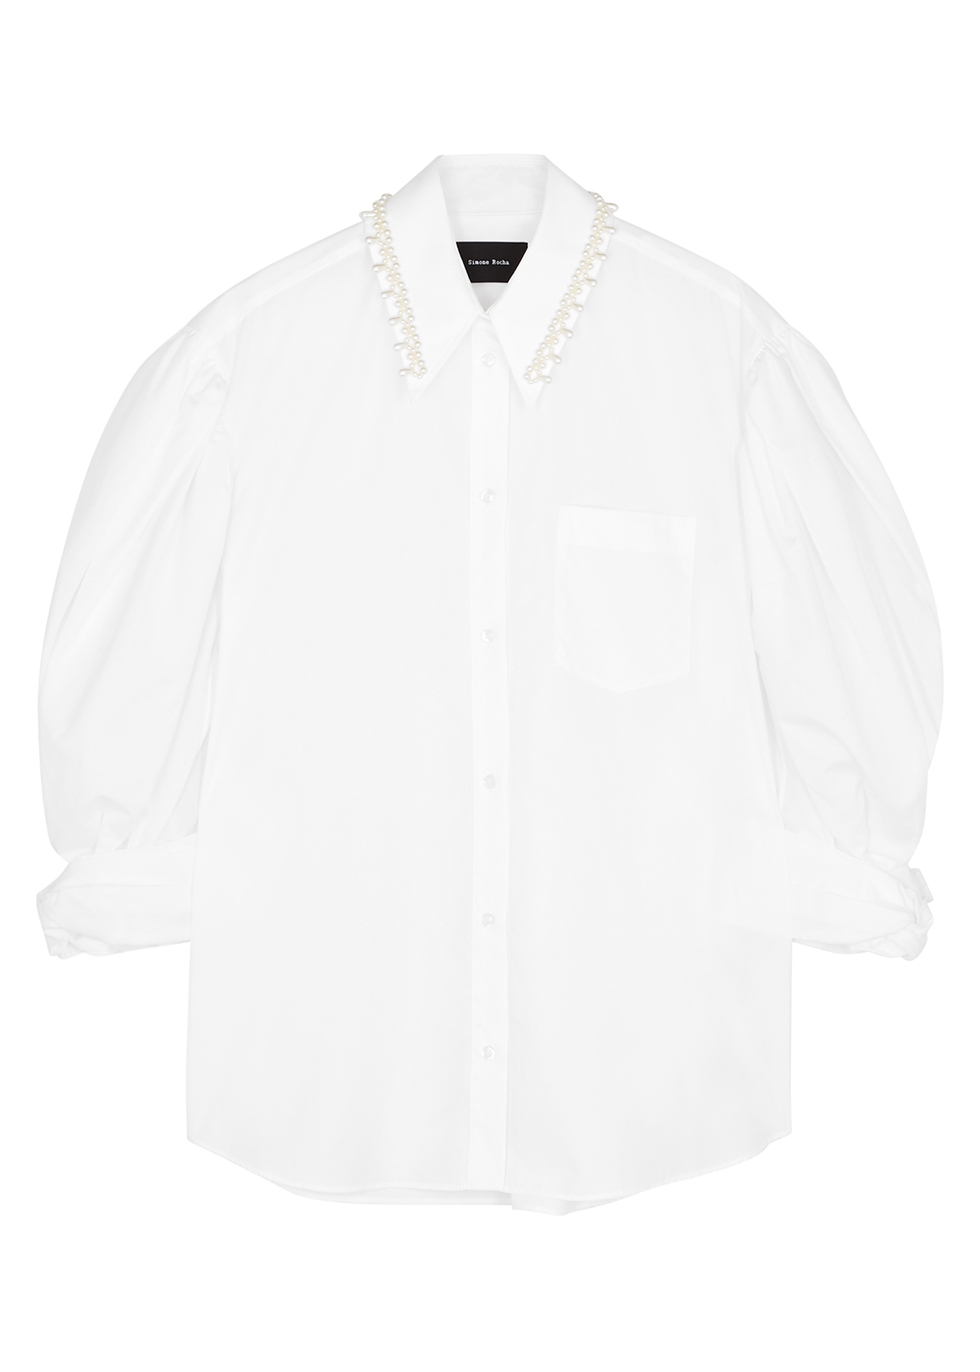 SIMONE ROCHA White embellished cotton shirt